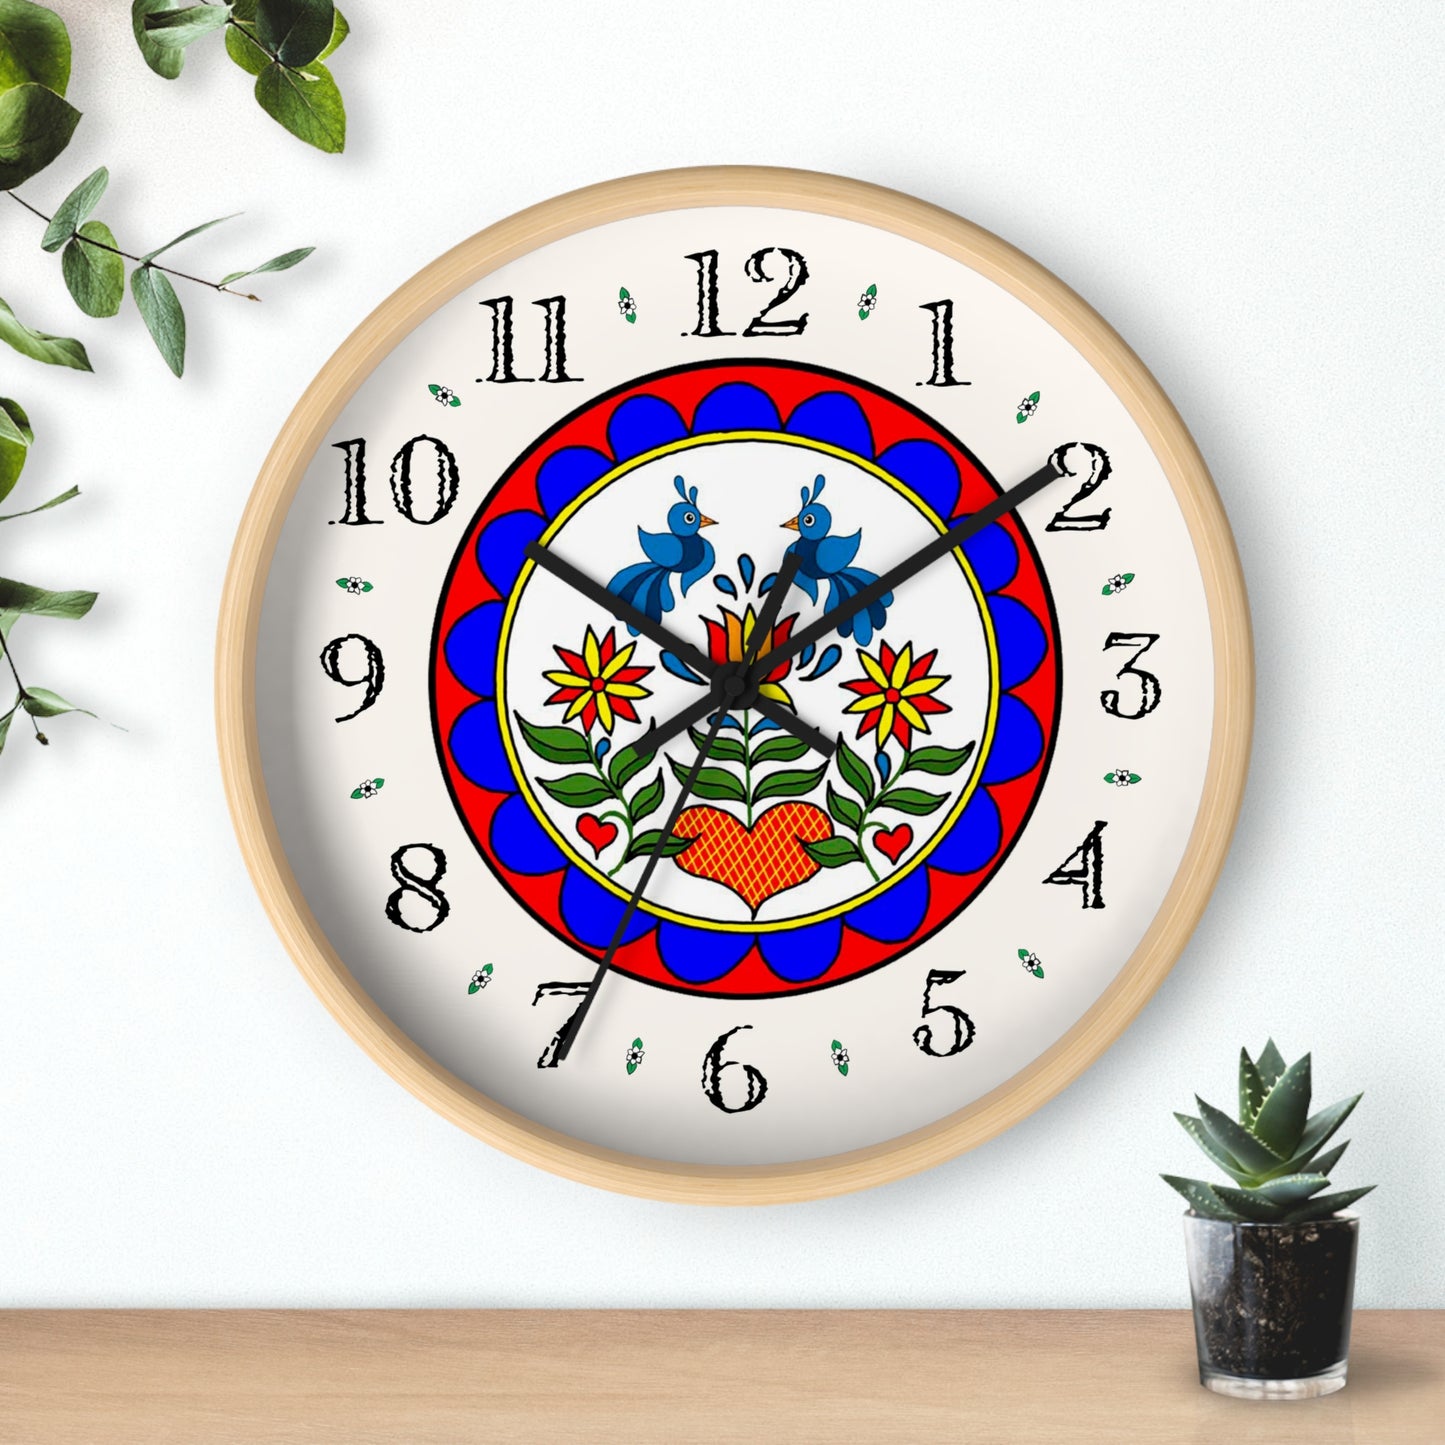 A delightful Pennsylvania Dutch design adds folk art charm to this decorative Heirloom Designer Clock. Shop today!